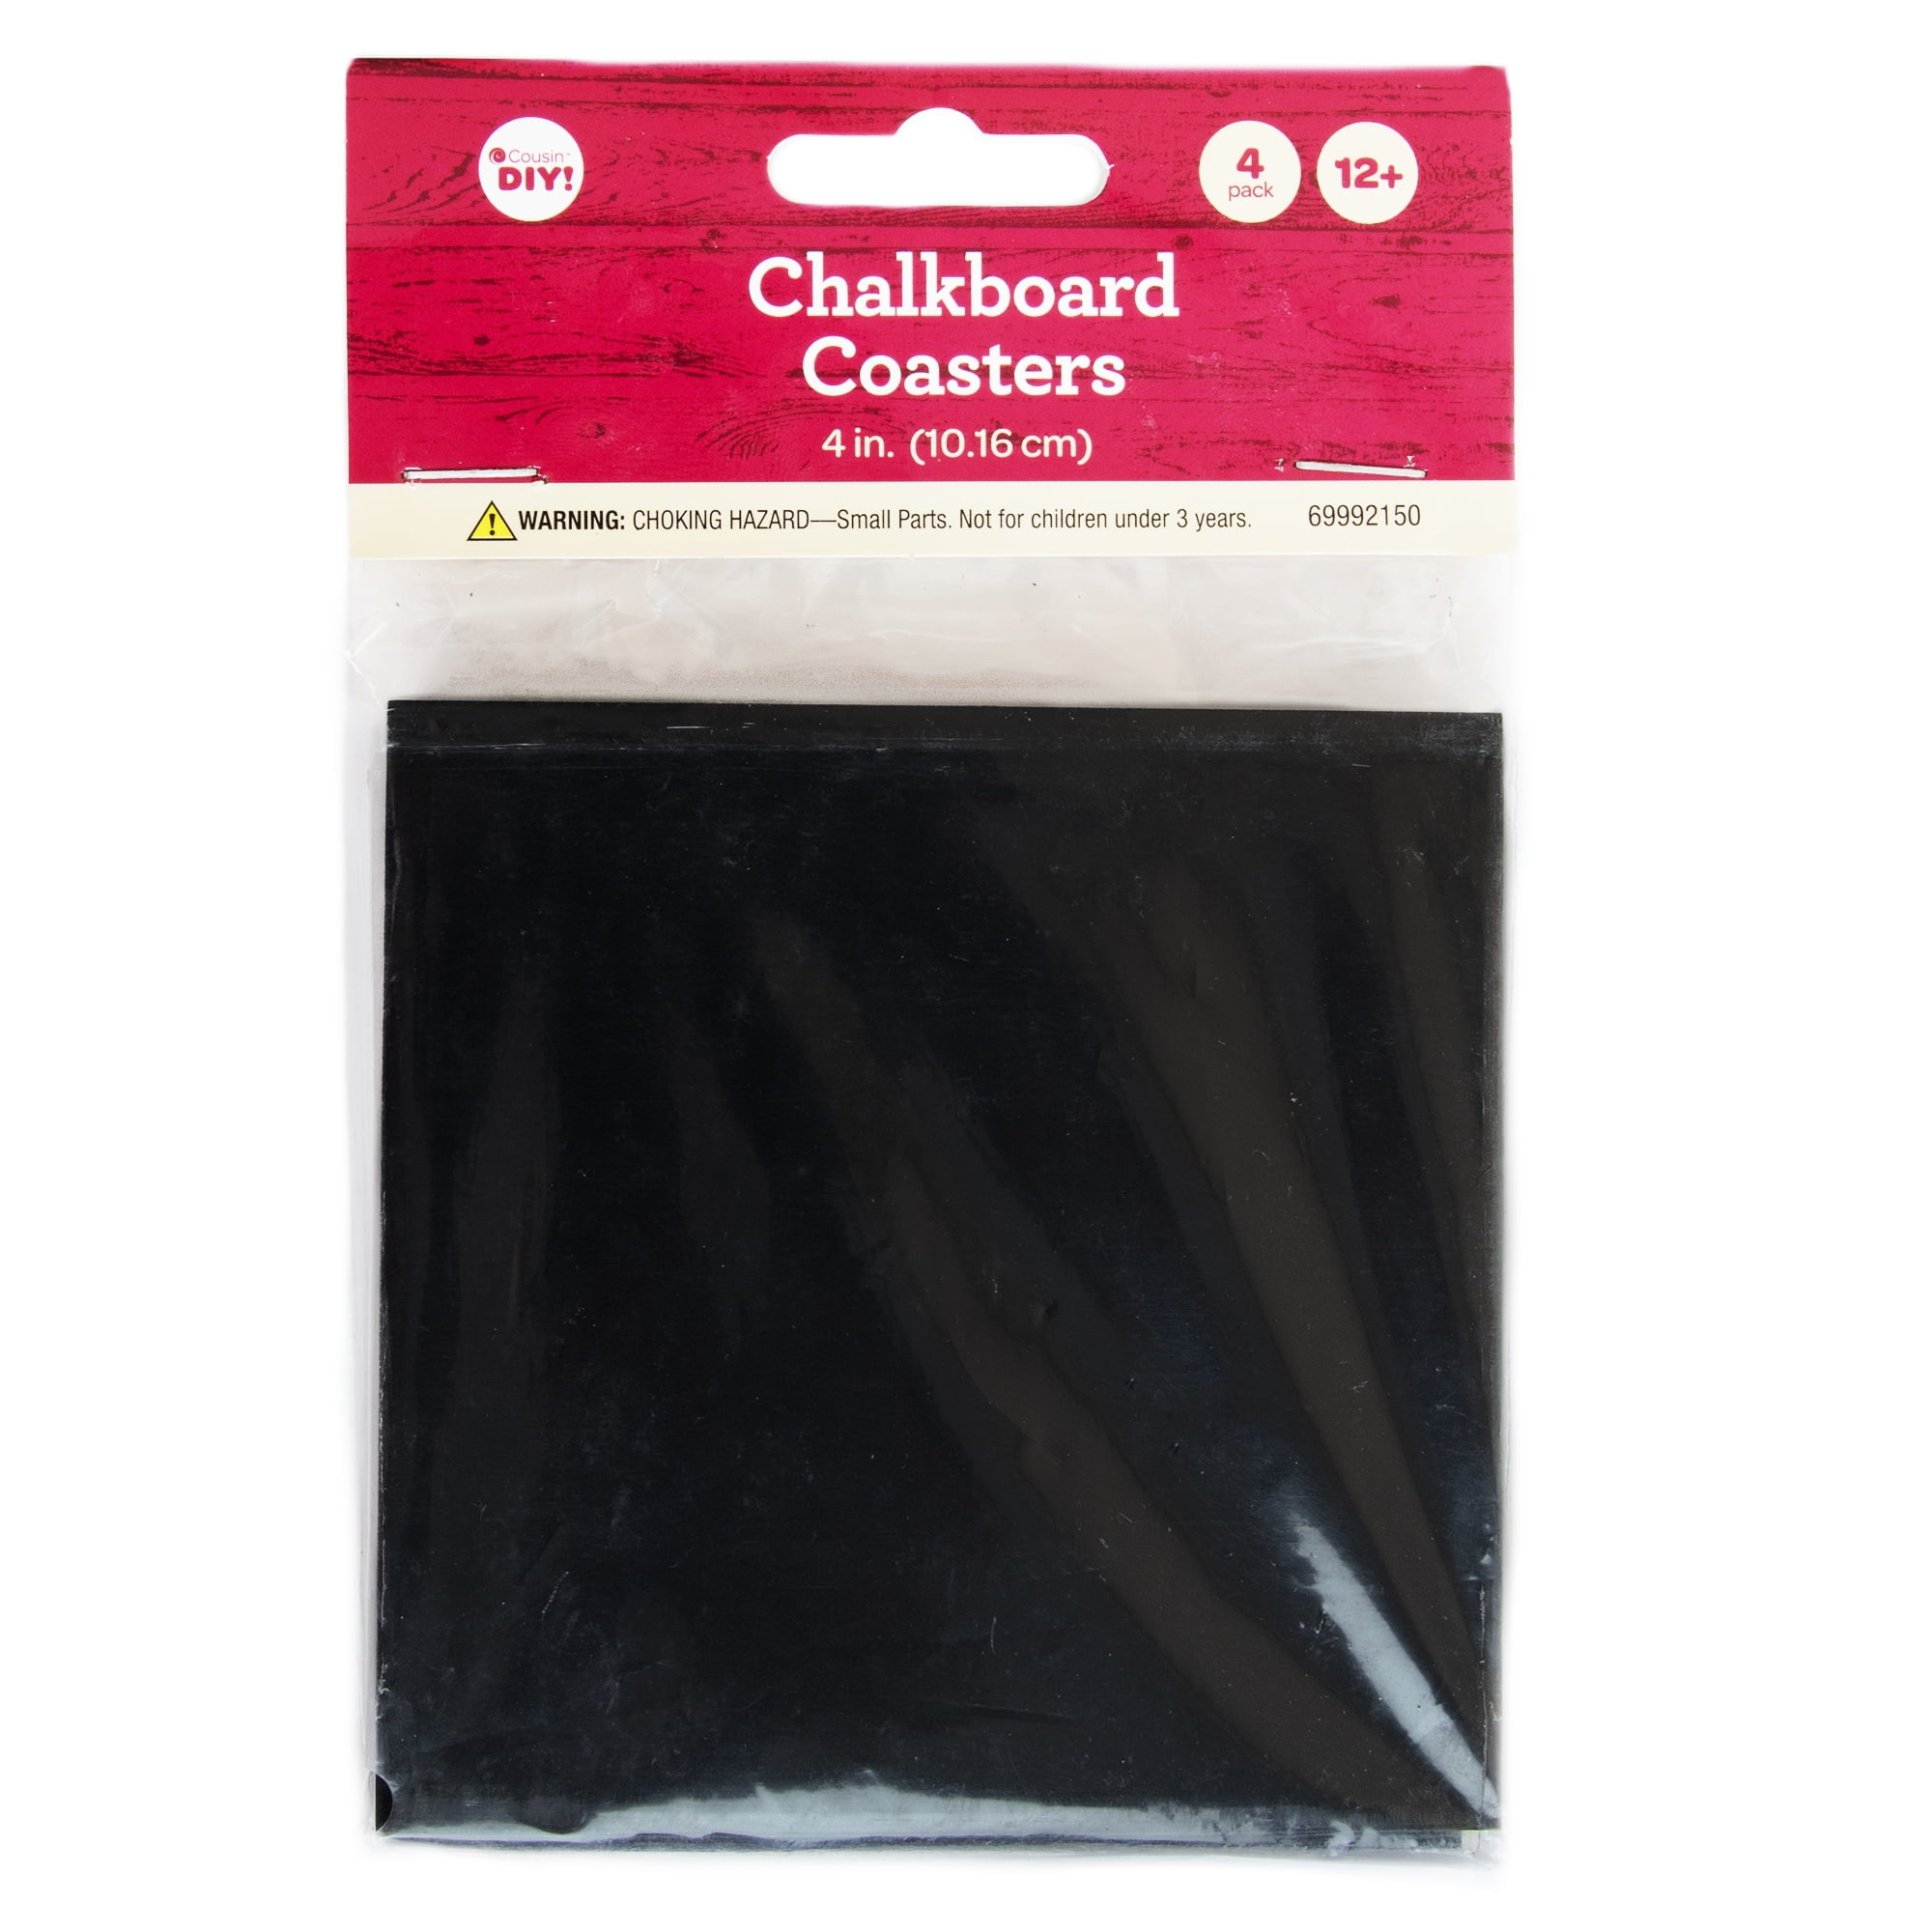 Blisstime 80 Pcs Self-Adhesive Cork Sheets 4x 4 for DIY Coasters, Square Cork Coasters, Cork tiles, Cork Mats, Mini Wall Cork Tiles with Strong